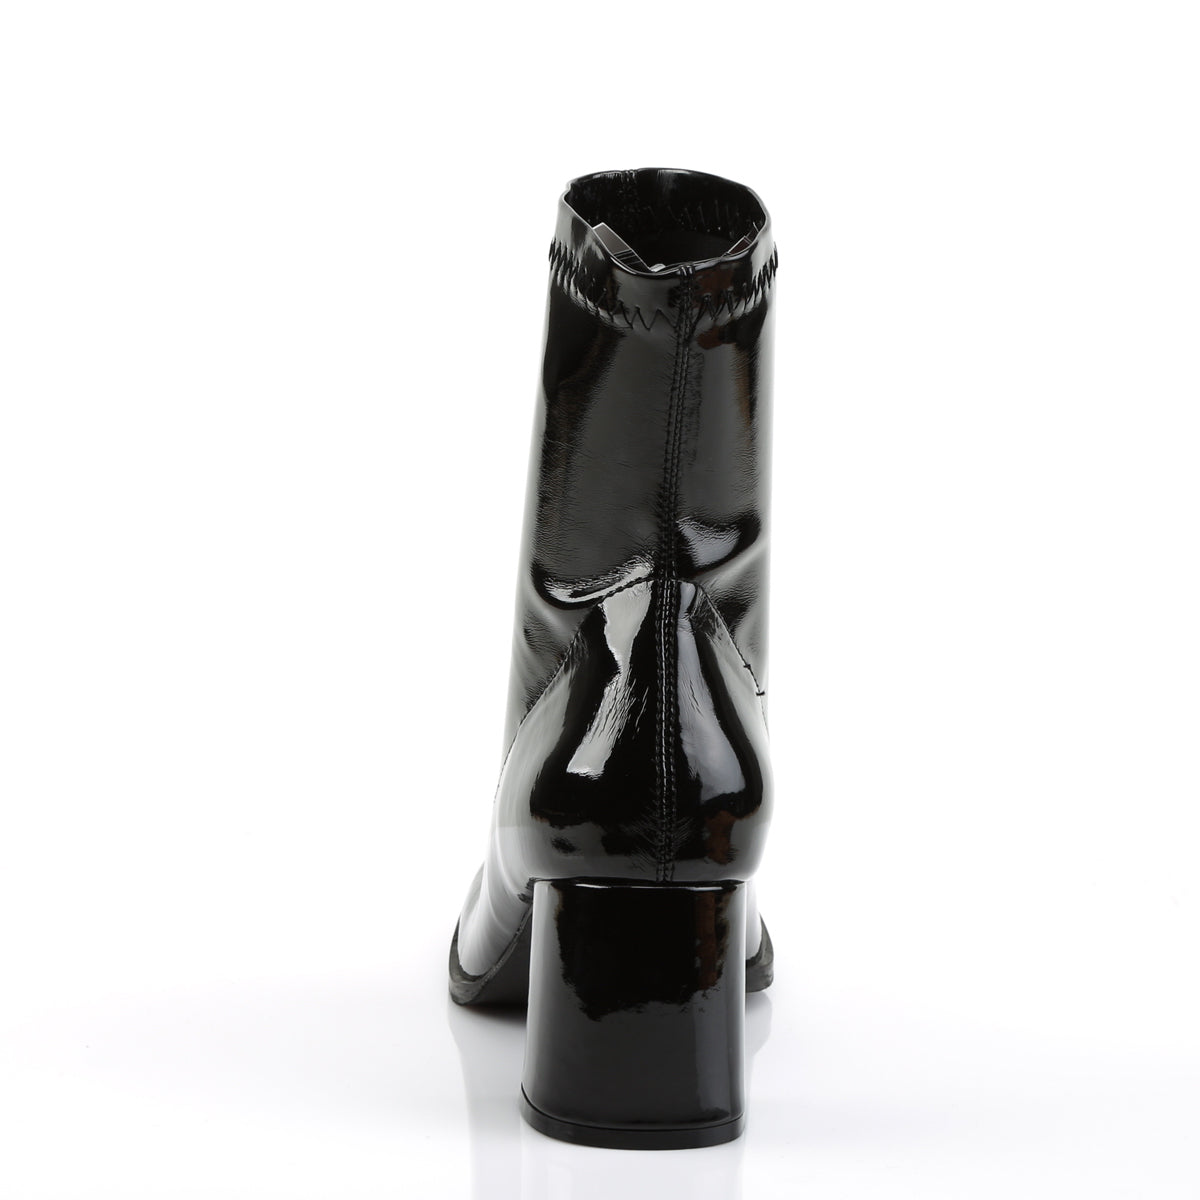 GOGO-150 Funtasma Fantasy Black Stretch Patent Women's Boots [Fancy Dress Footwear]